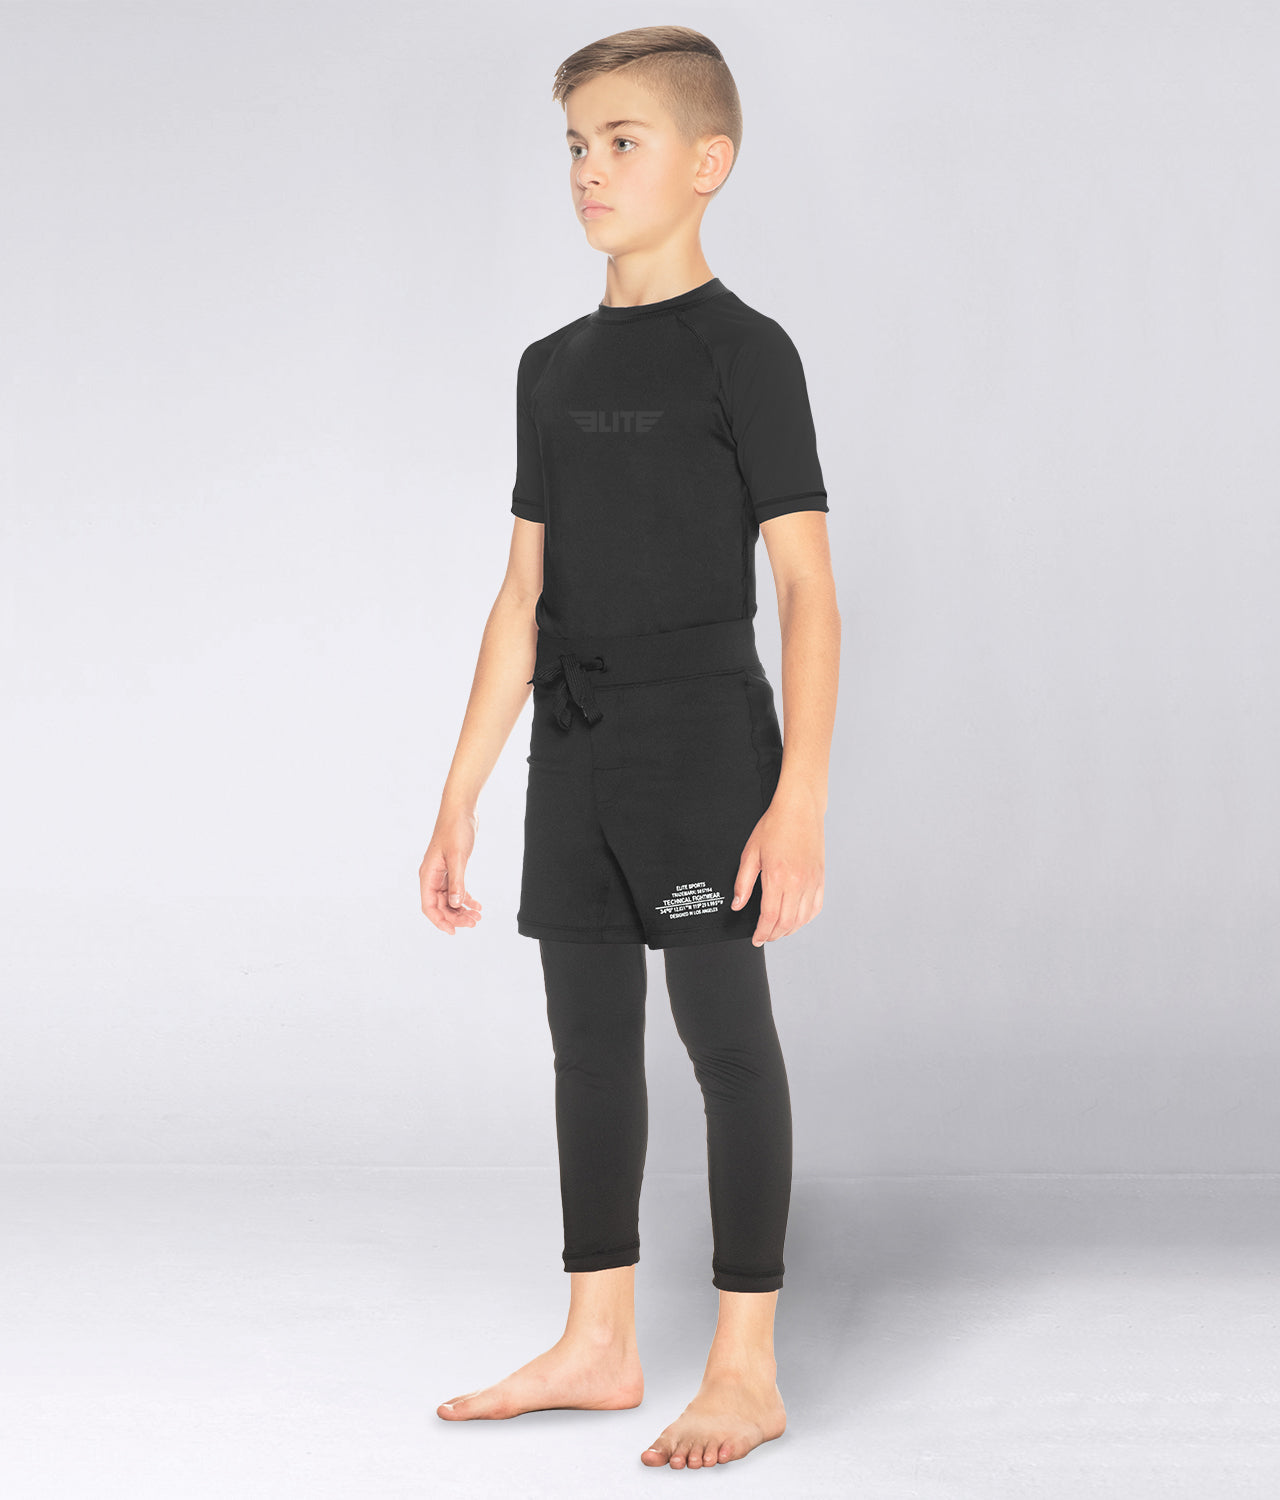 Elite Sports Kids' Standard Black Short Sleeve BJJ Rash Guard Side View